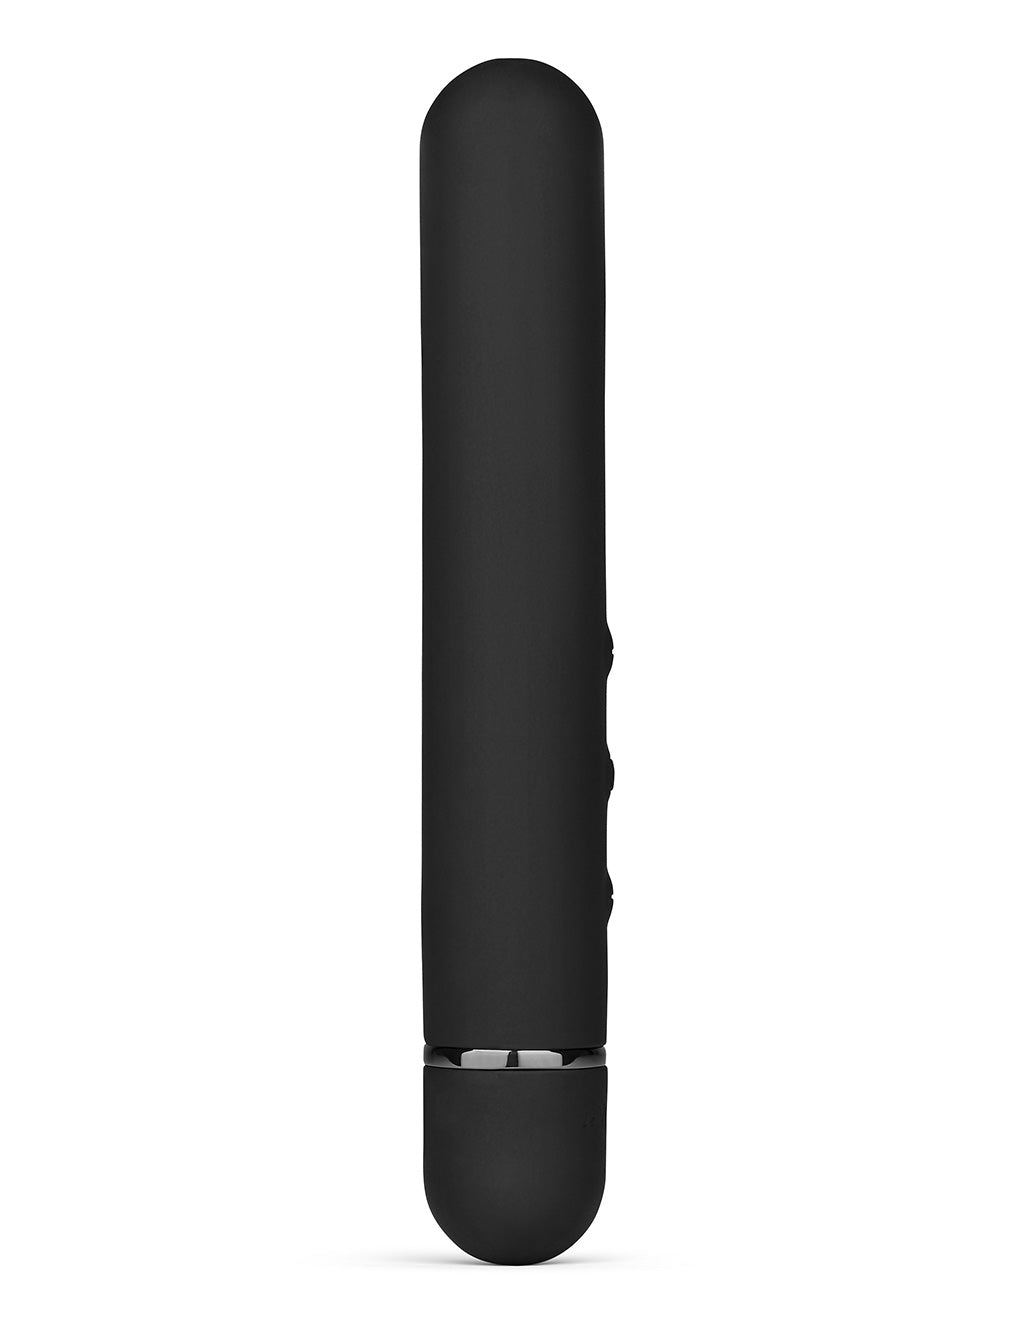 Le Wand Baton Rechargeable Clitoral Vibrator- Black- Side